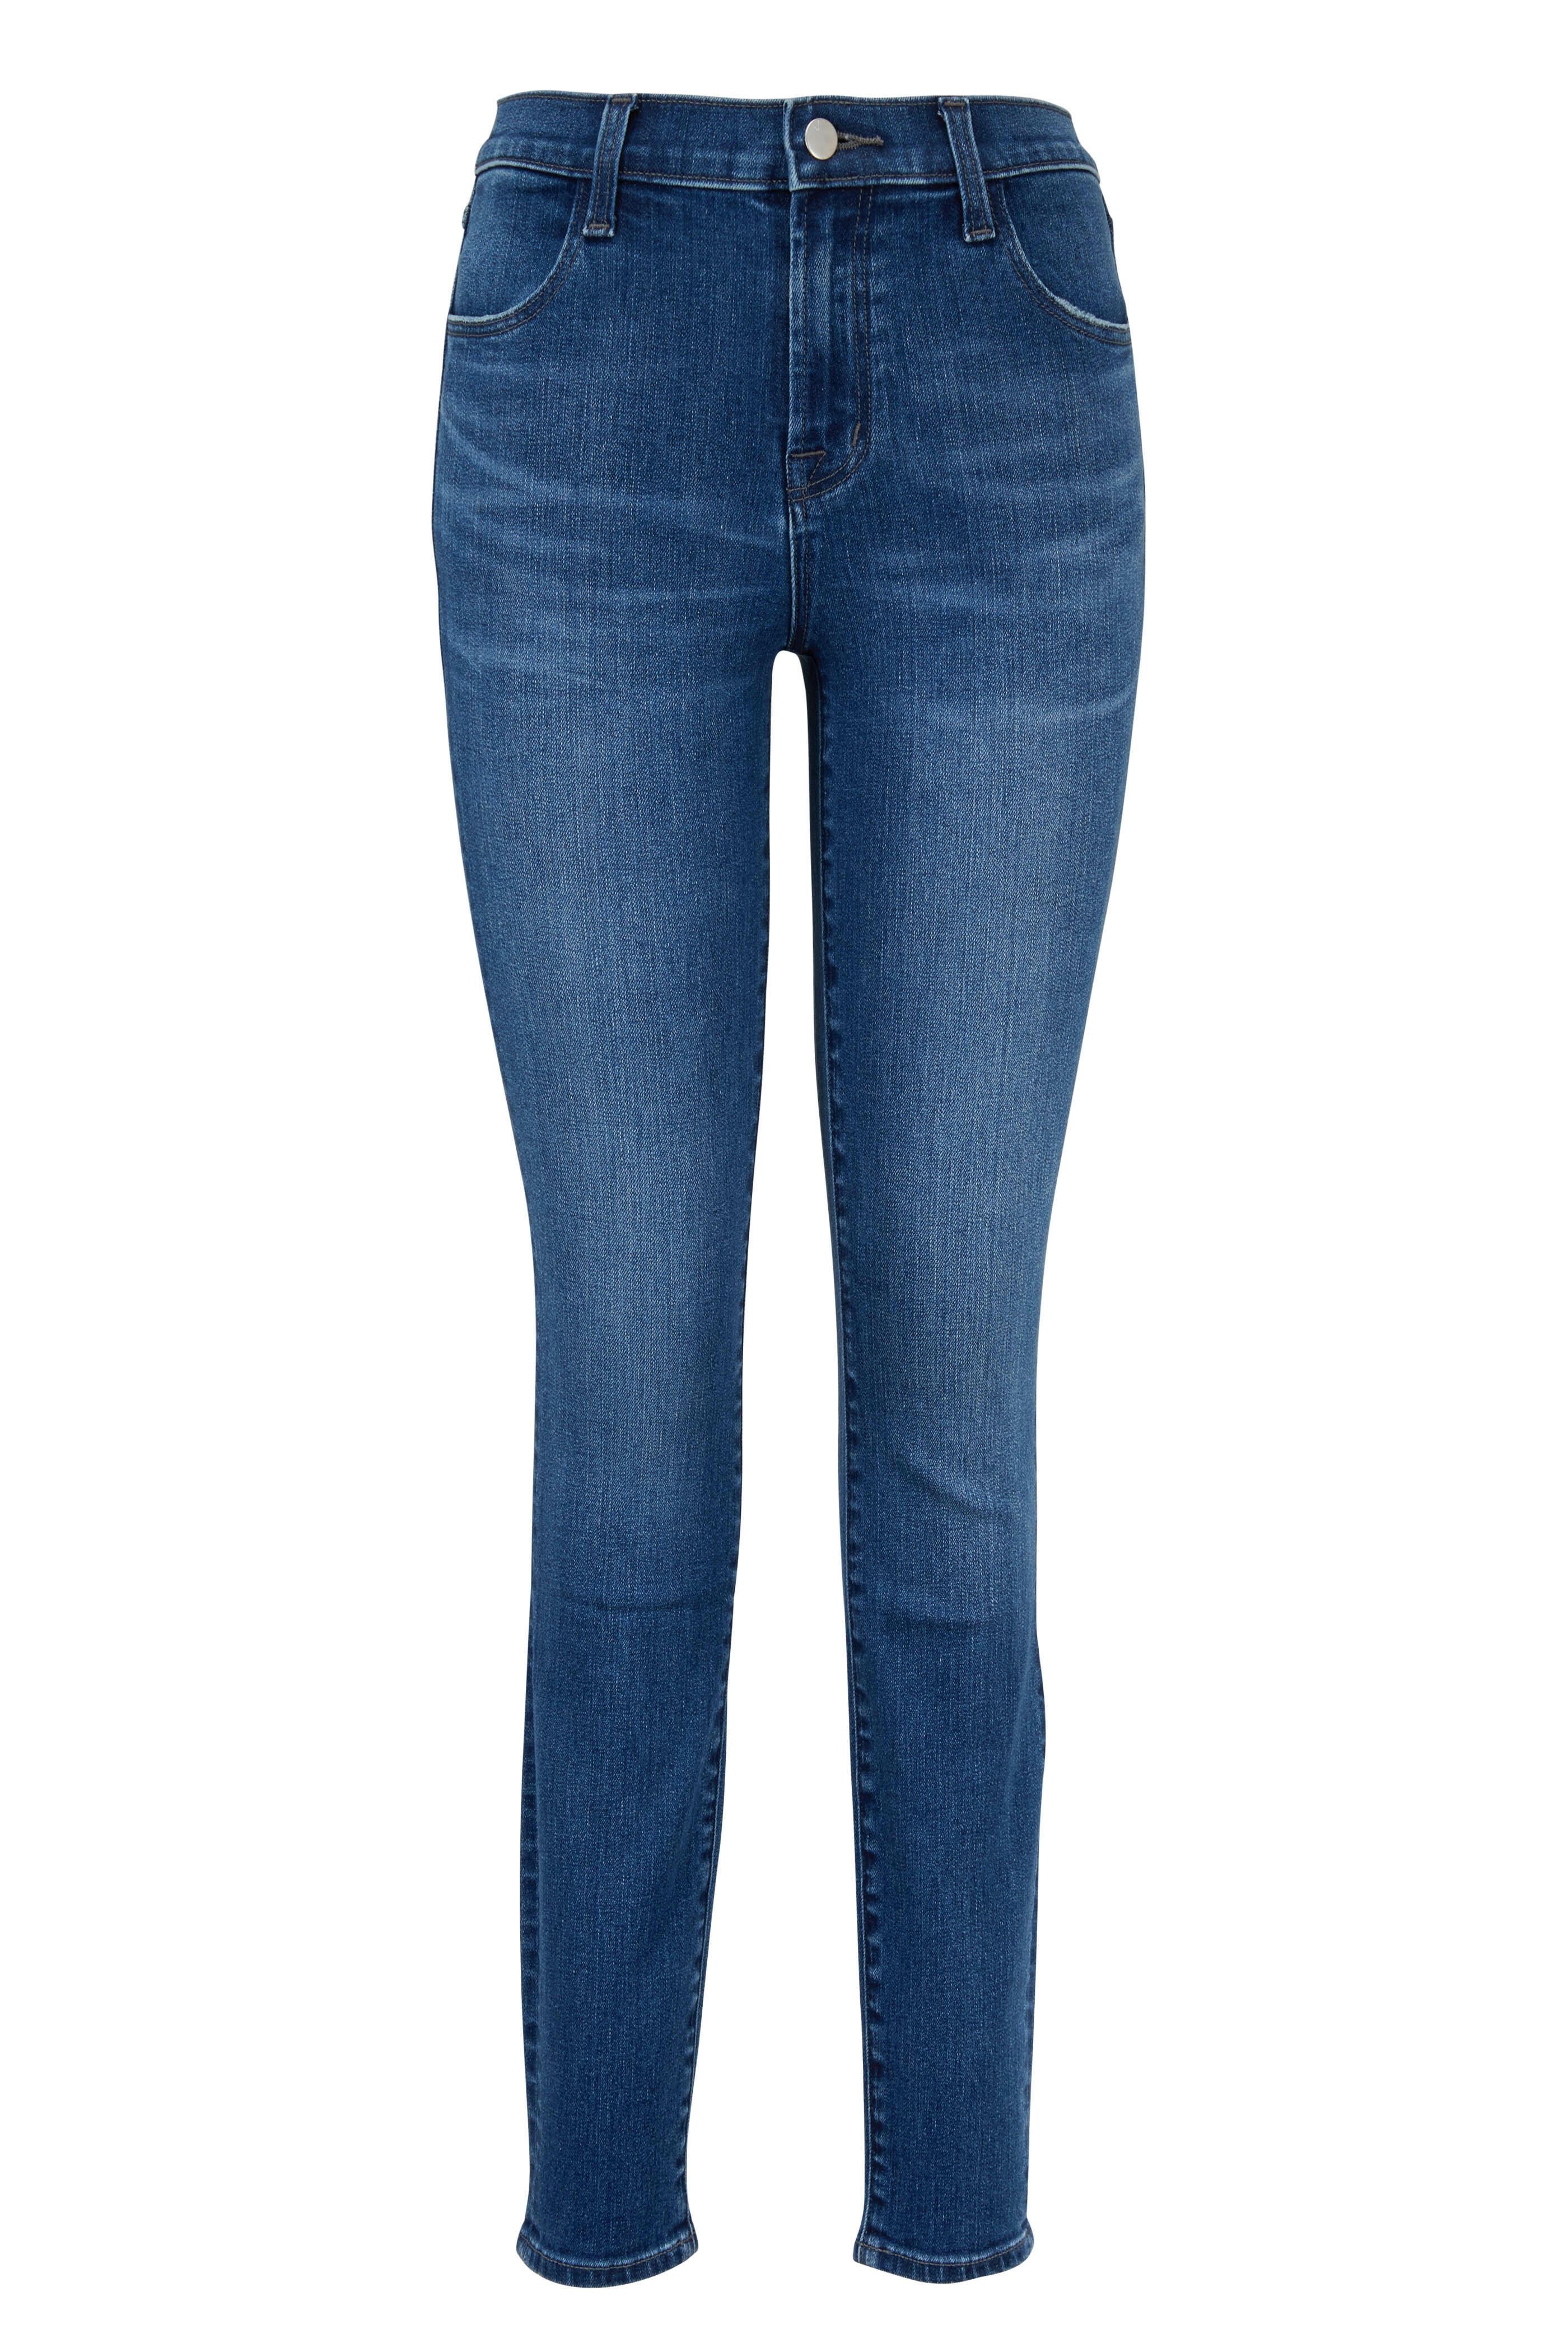 J Brand - Maria Polaris High-Rise Super Skinny Jean